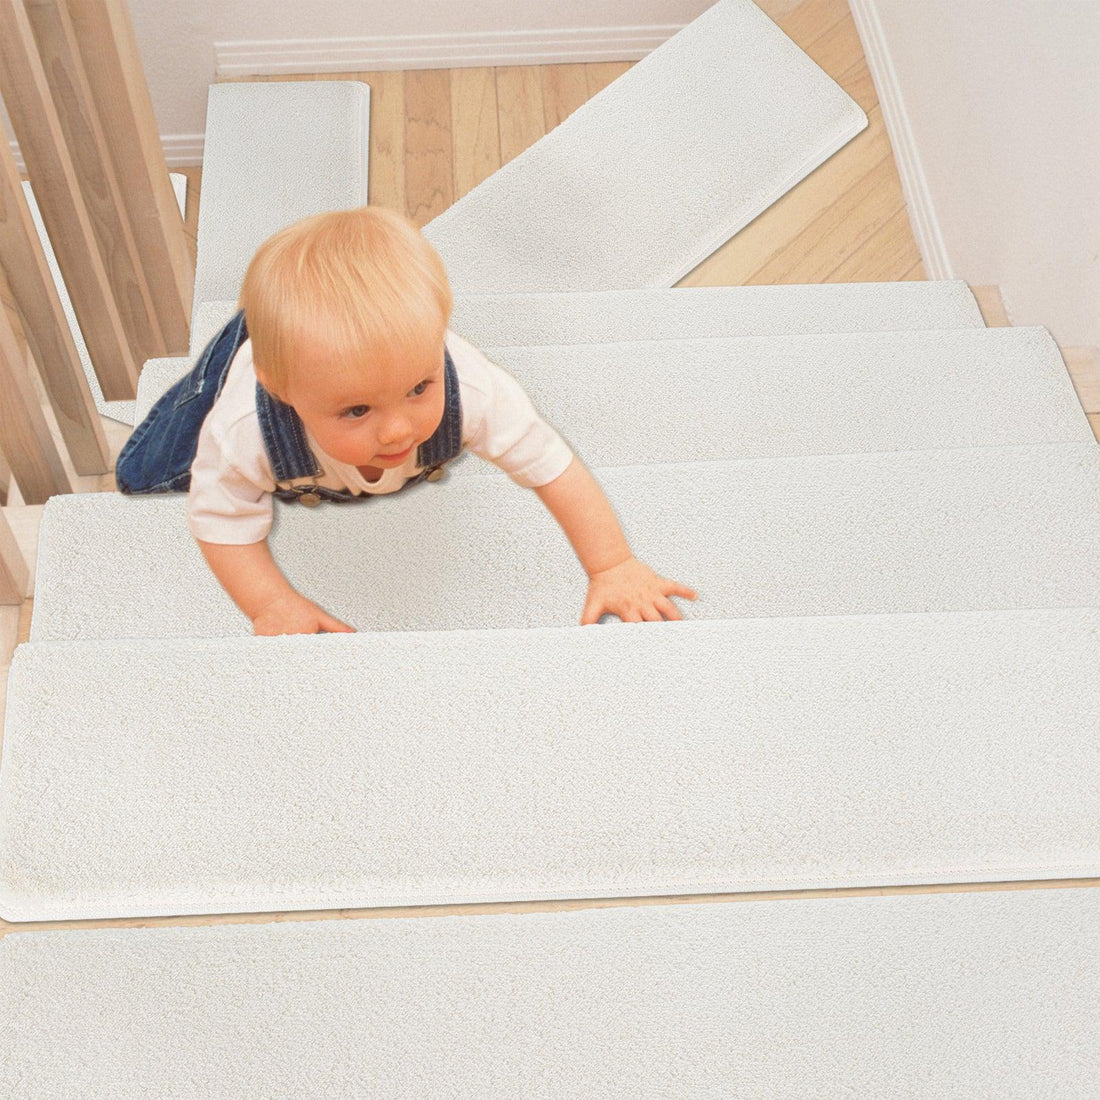 Pure Era - Non-slip Tape Free Bullnose Carpet Stair Treads Pet Friendly Peel and Stick 